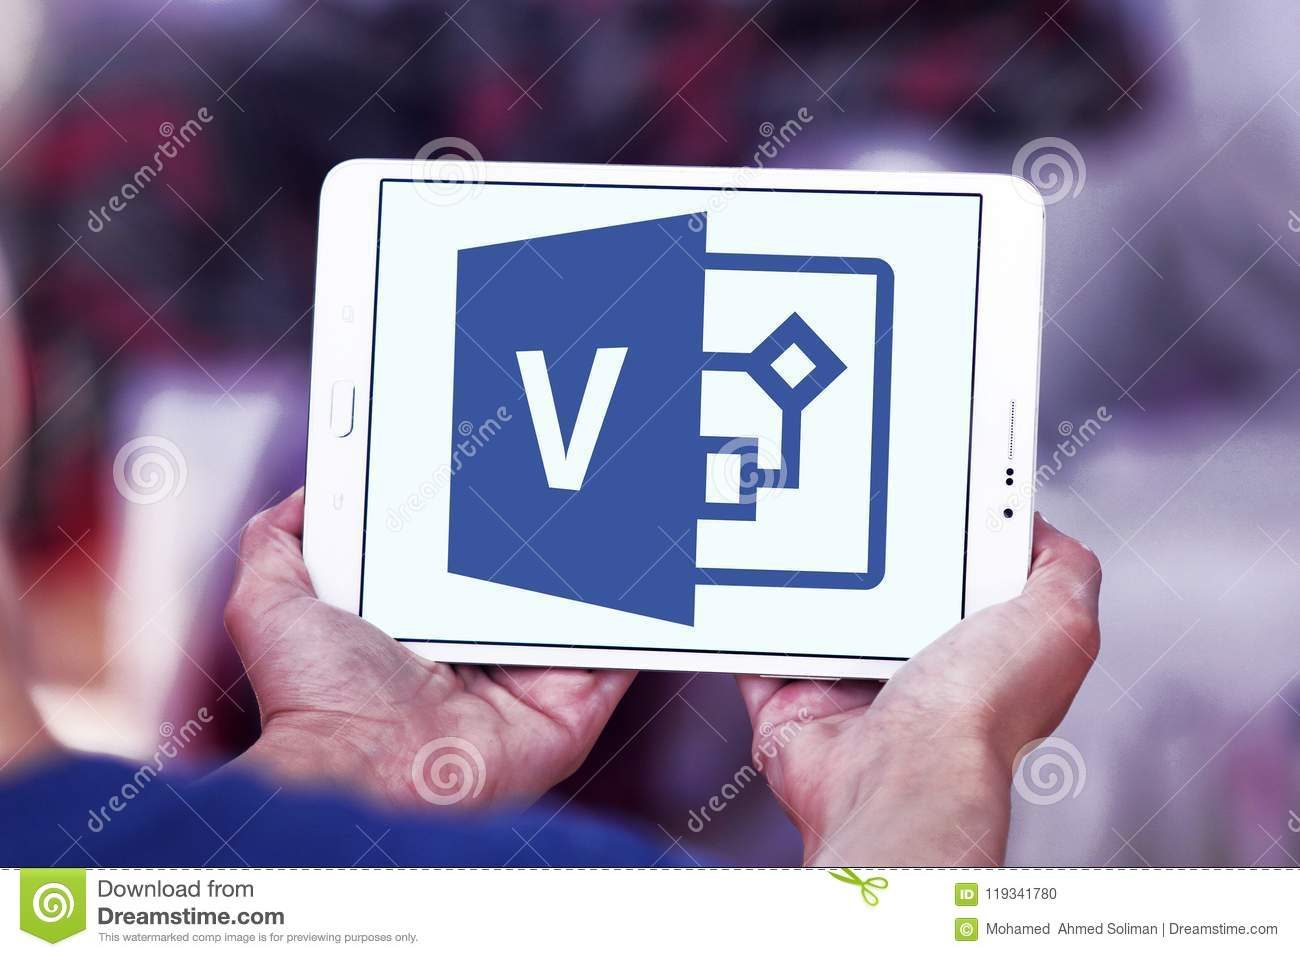 logo-microsoft-visio-samsung-tablet-microsoft-office-visio-diagramming-vector-graphics-application-part-119341780-2334783